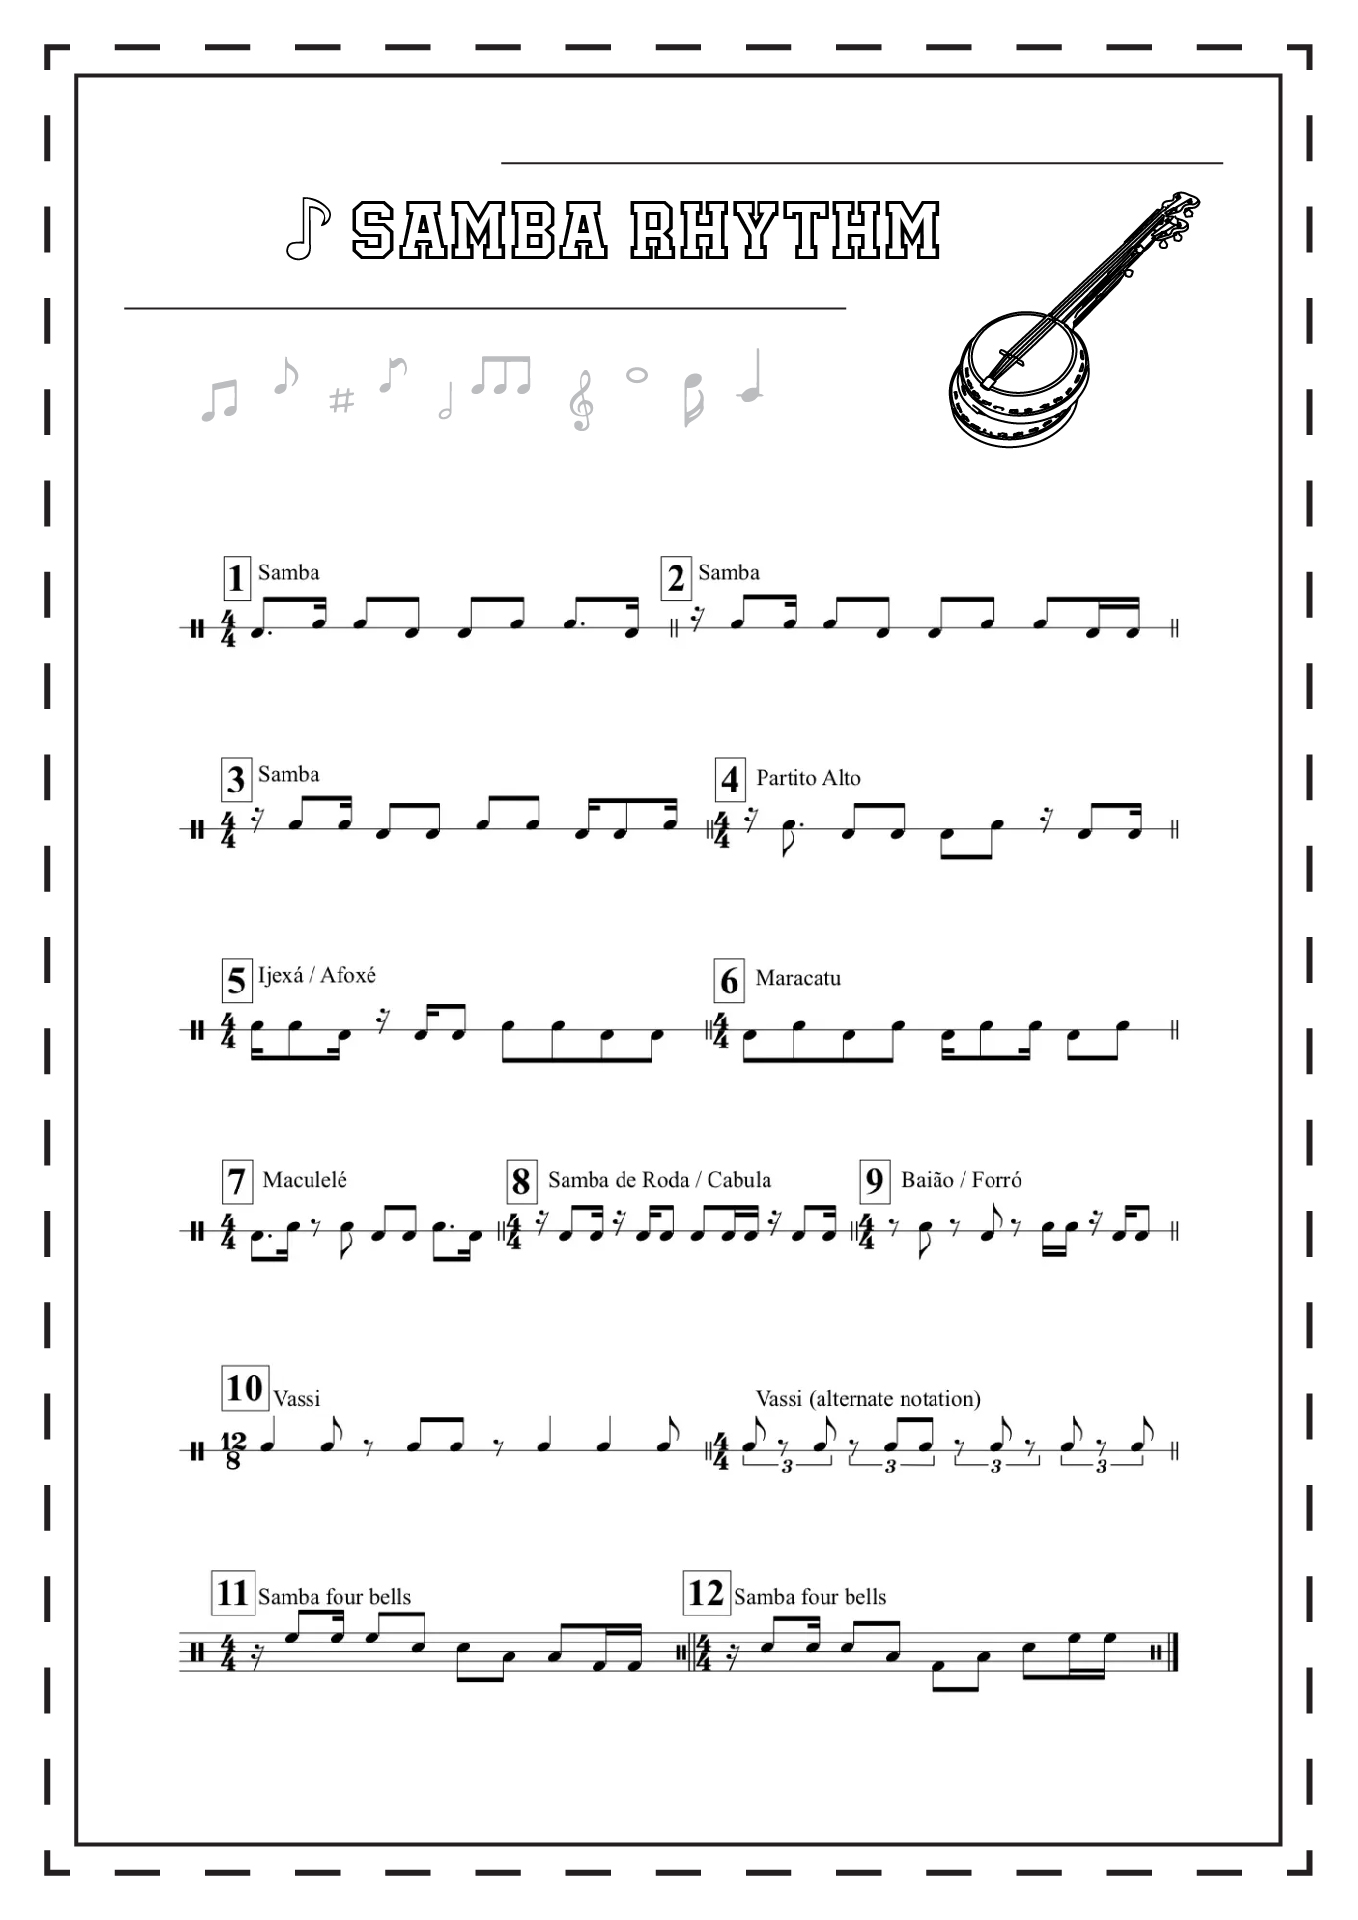 Samba Rhythm Patterns Image